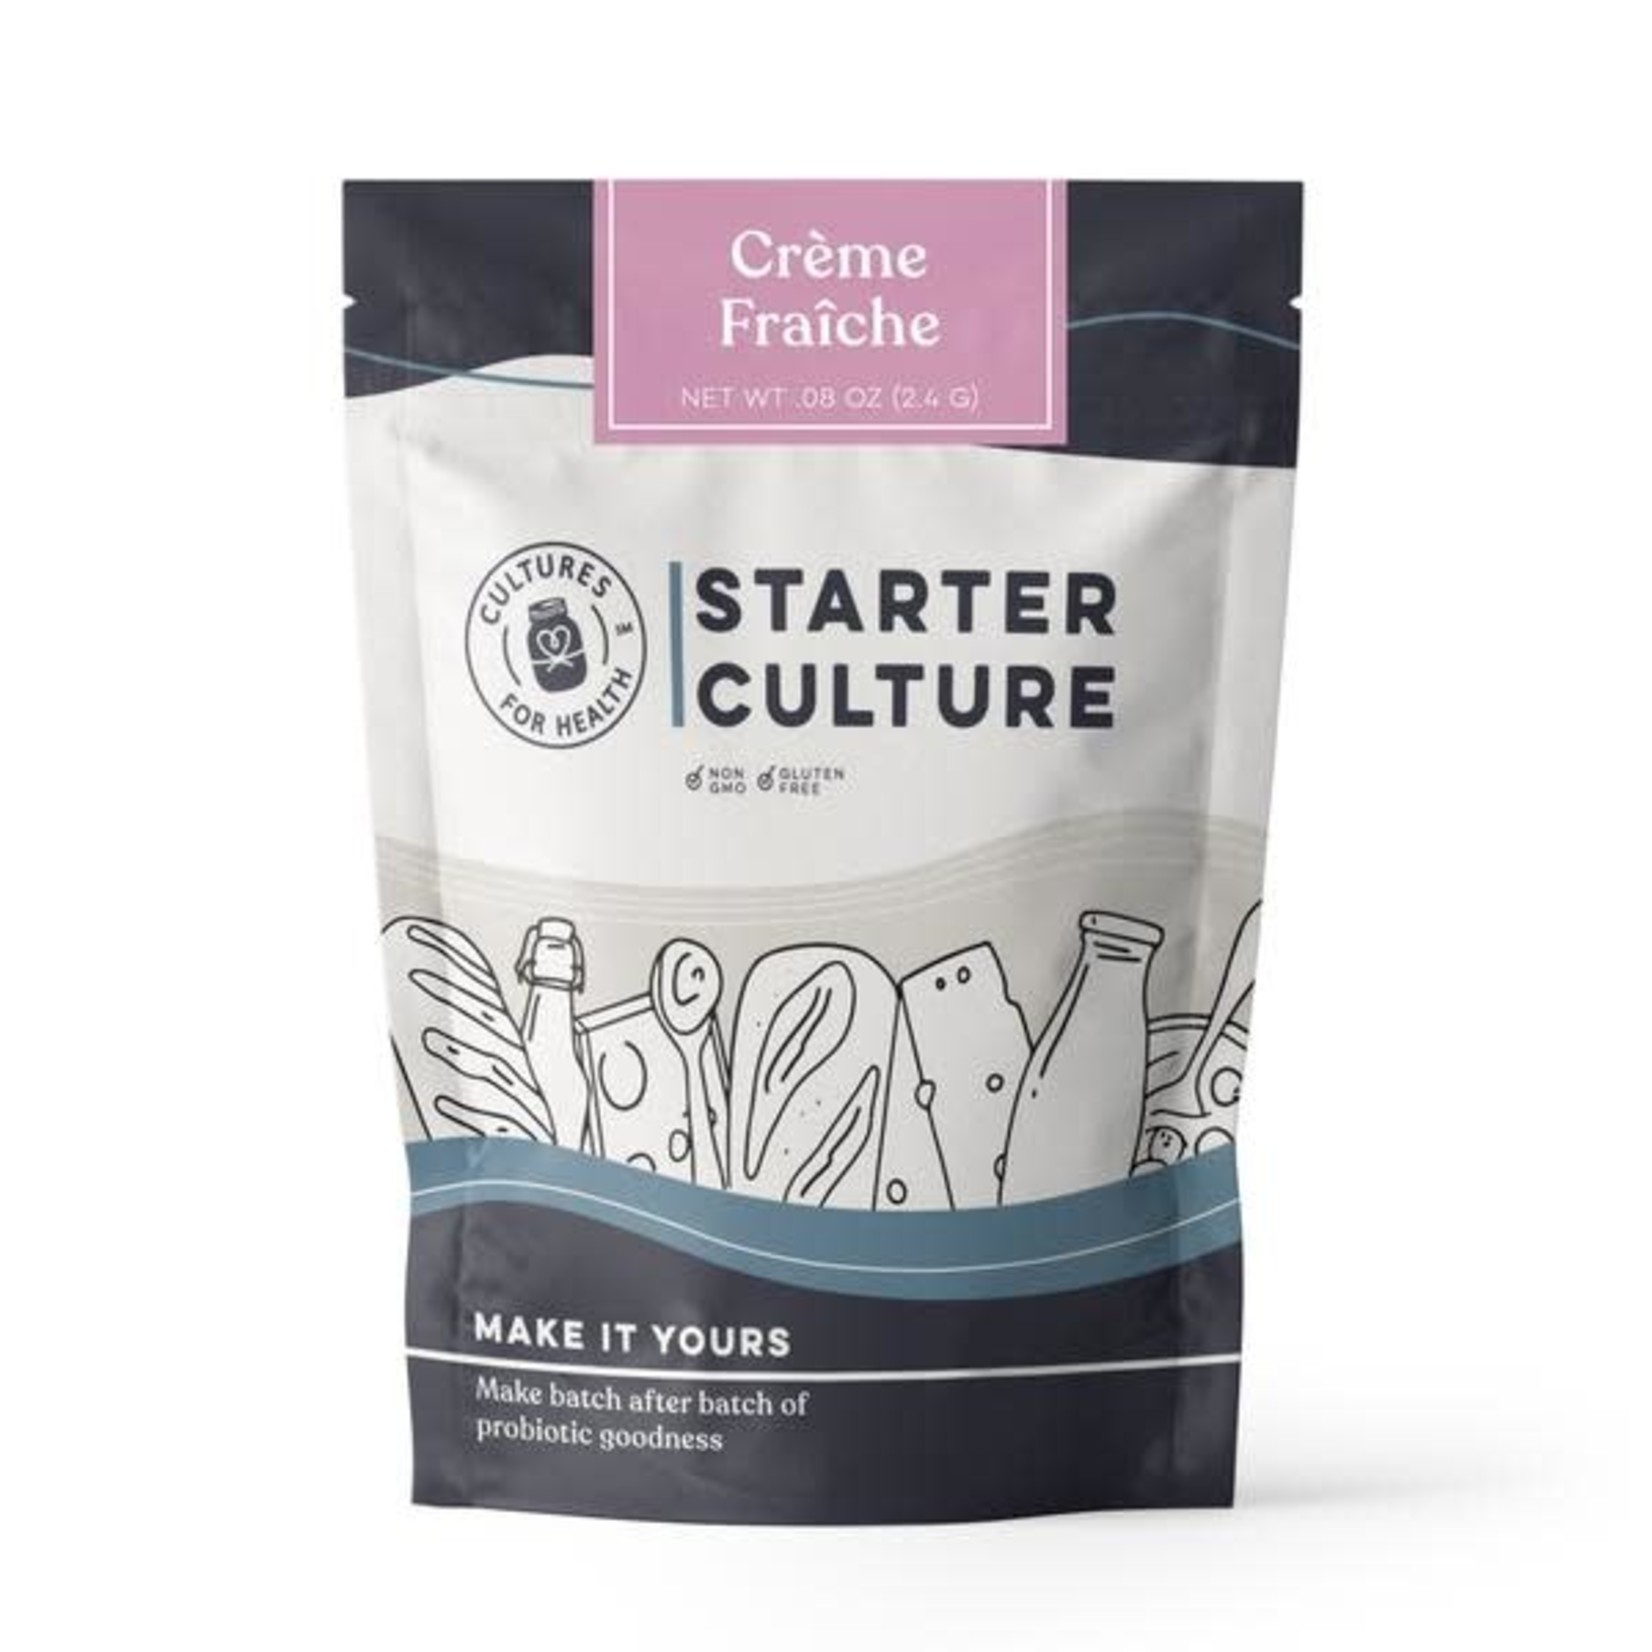 Cultures for Health Creme Fraiche Starter Culture